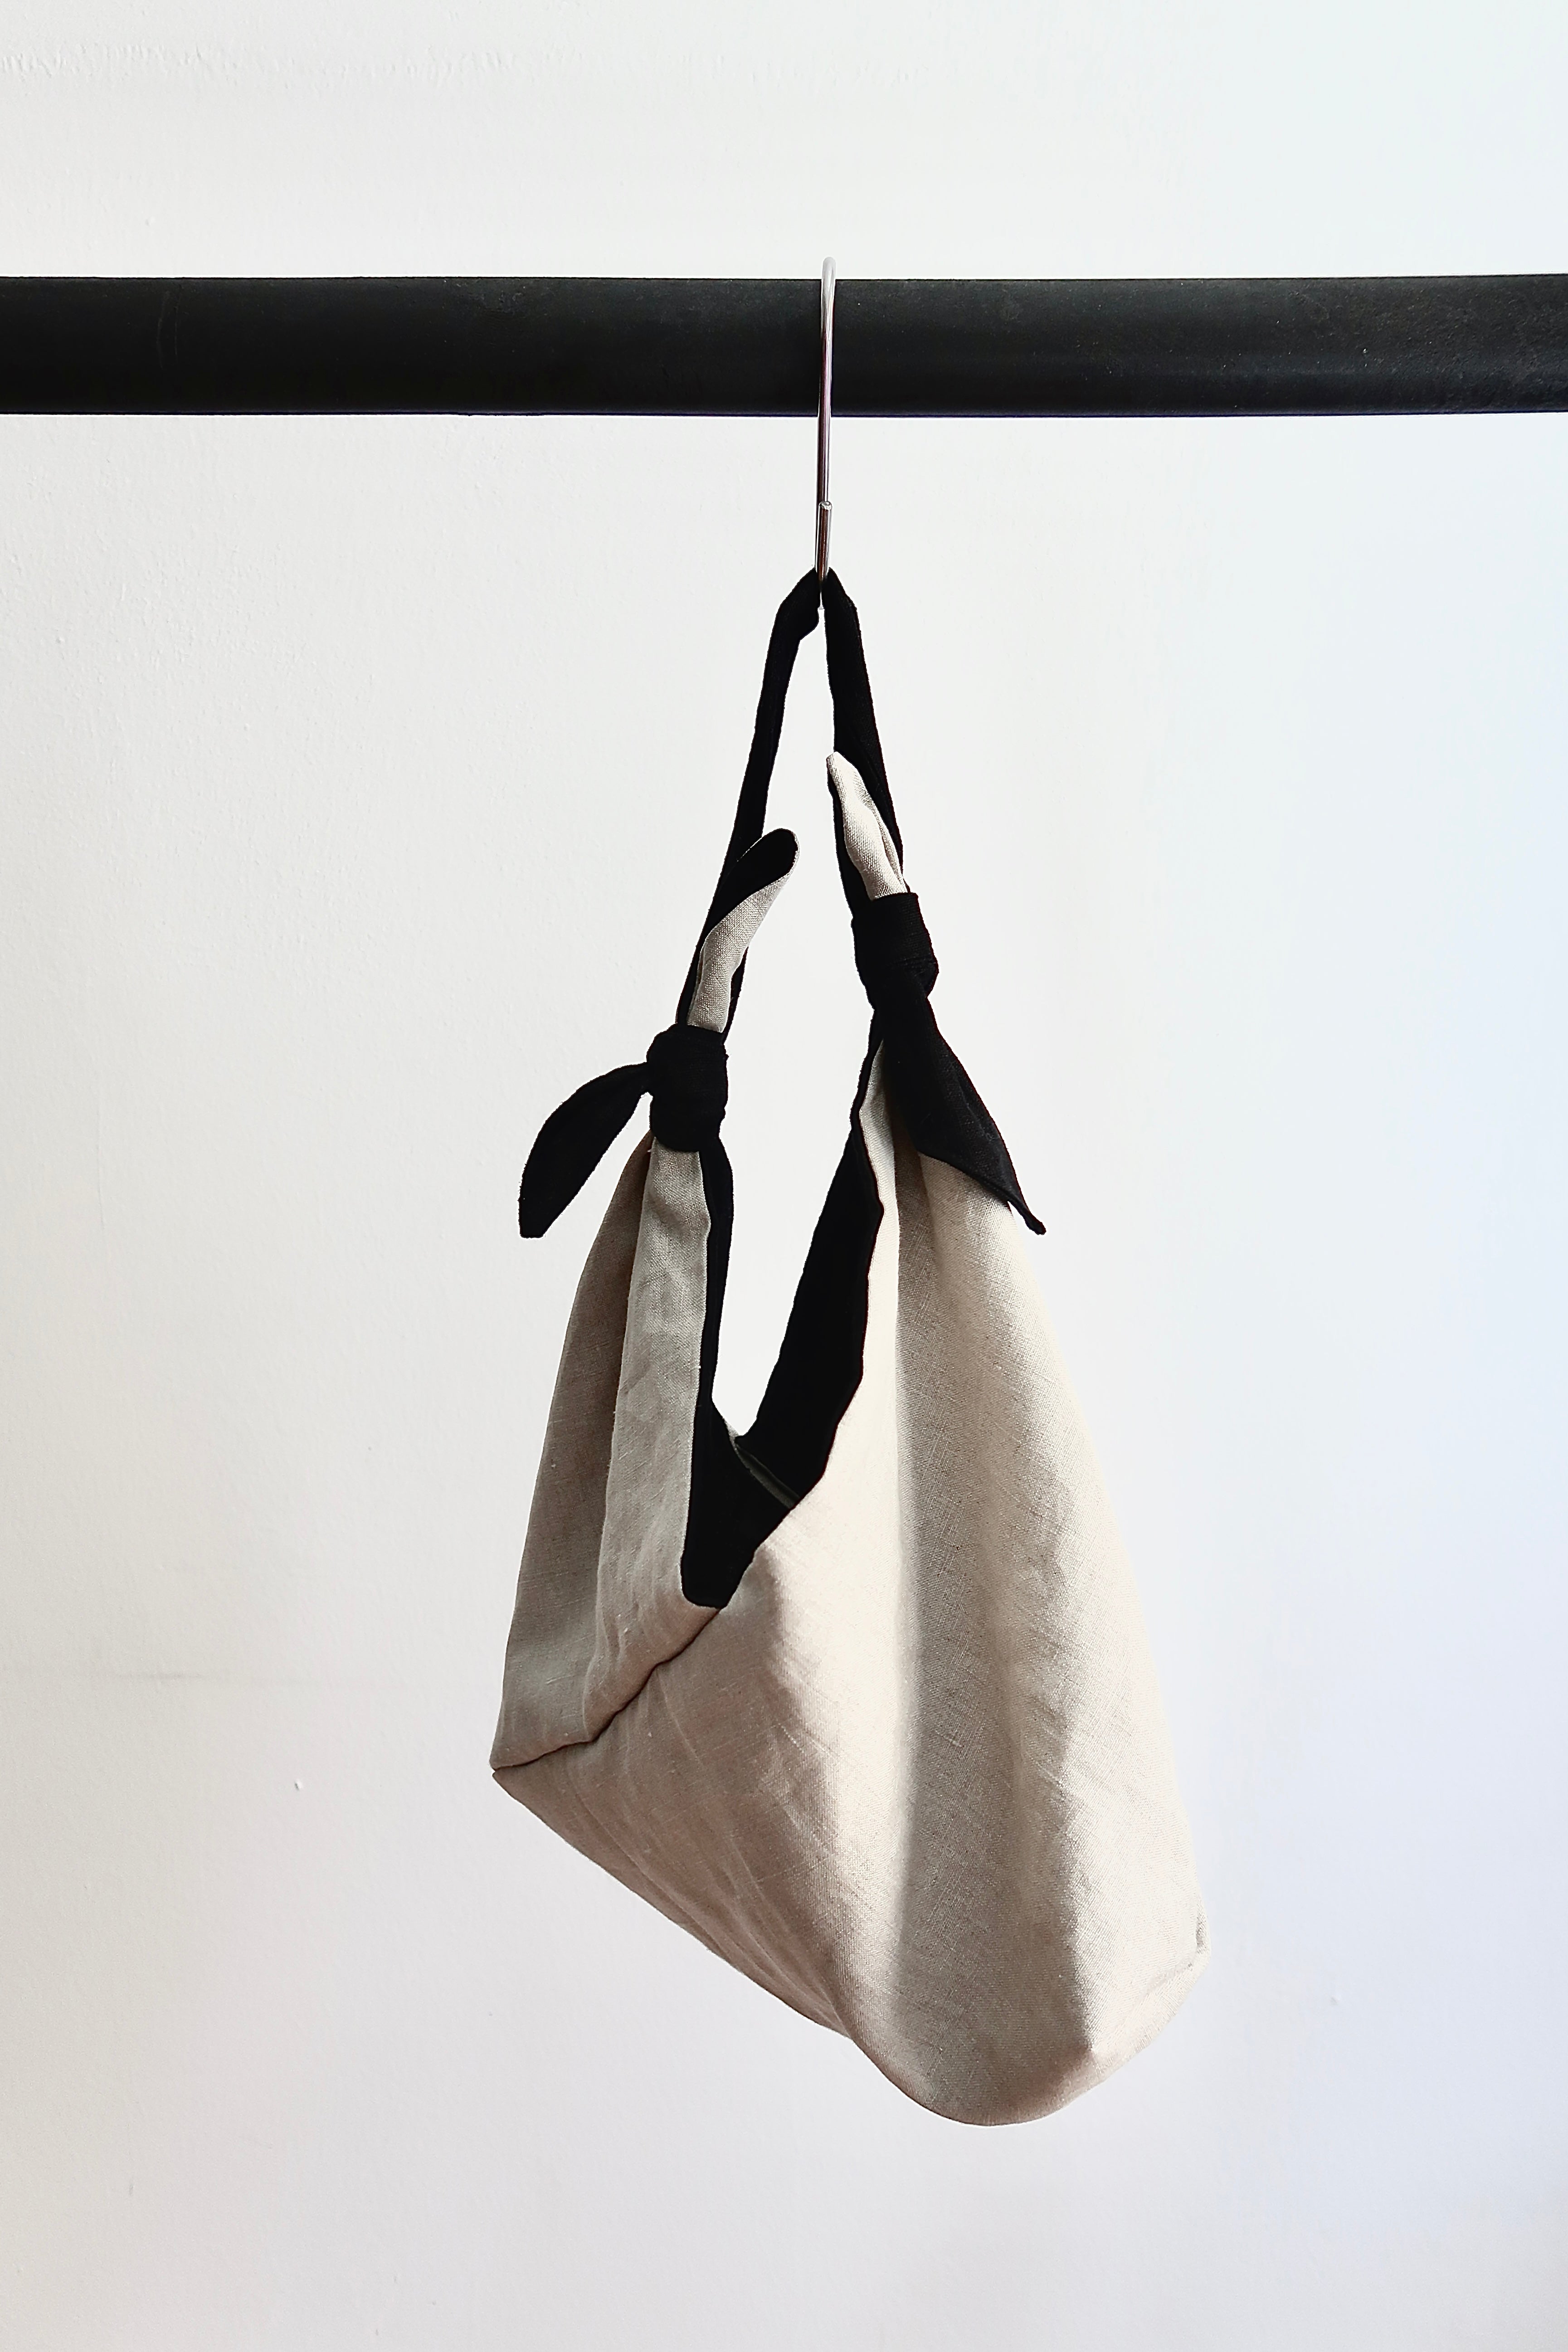 Origami Bag Project | Spotlight Australia